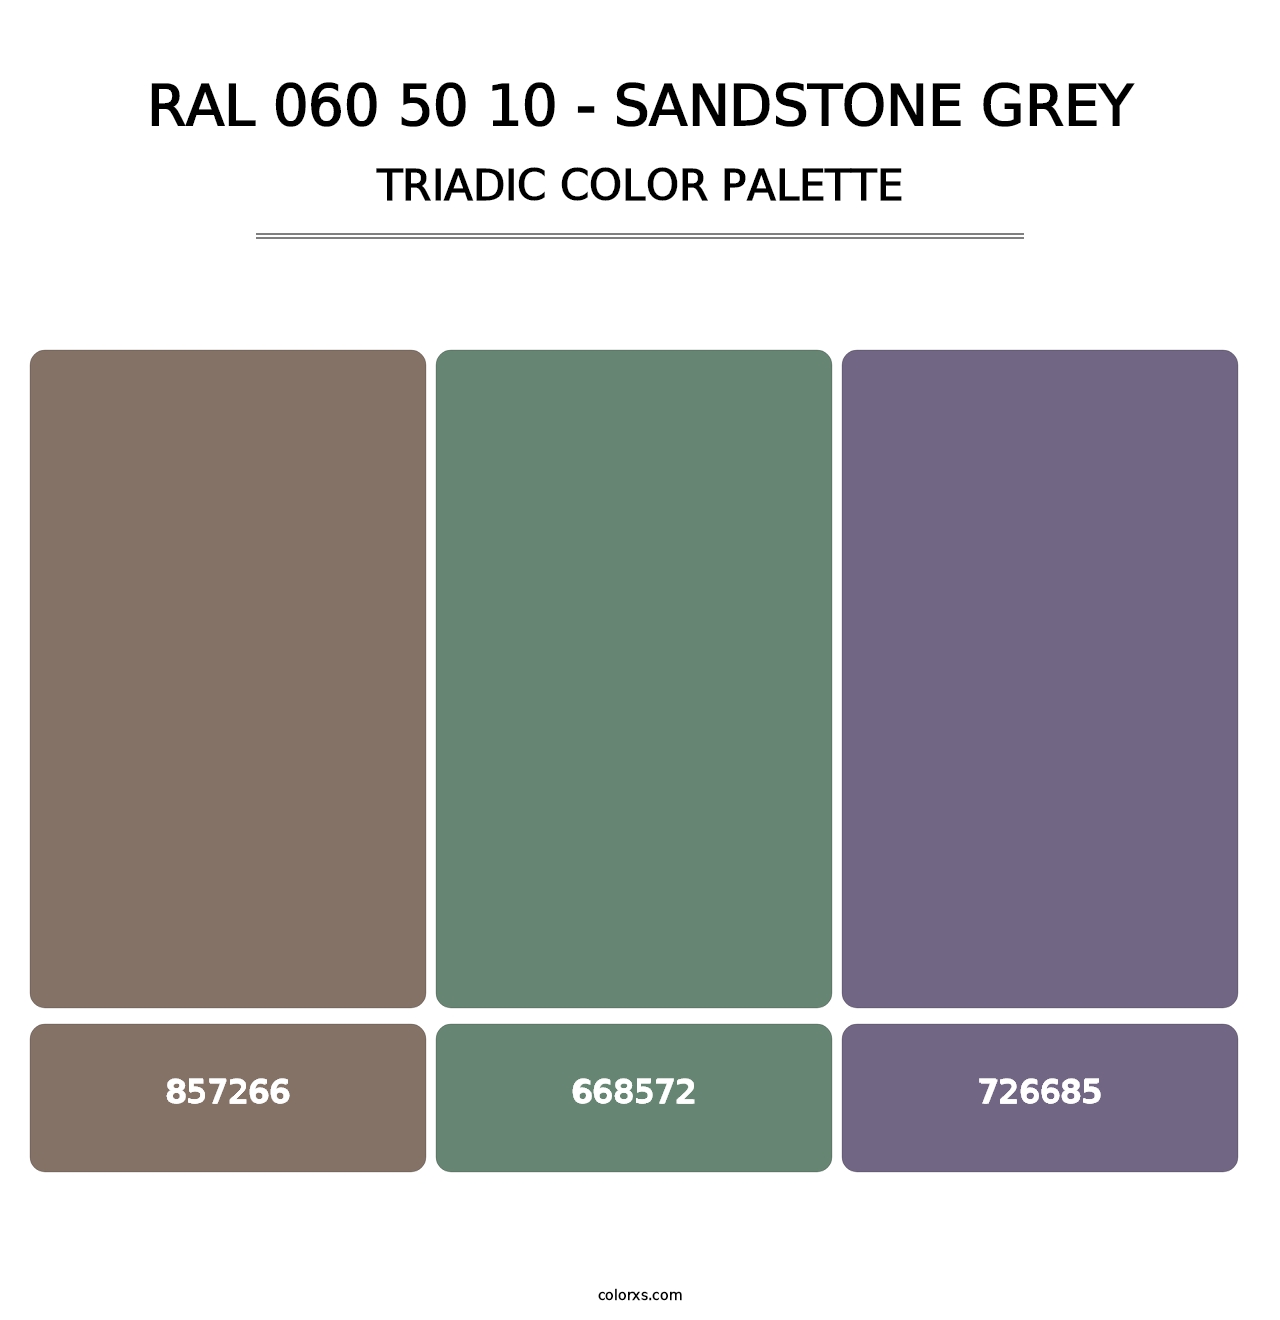 RAL 060 50 10 - Sandstone Grey - Triadic Color Palette